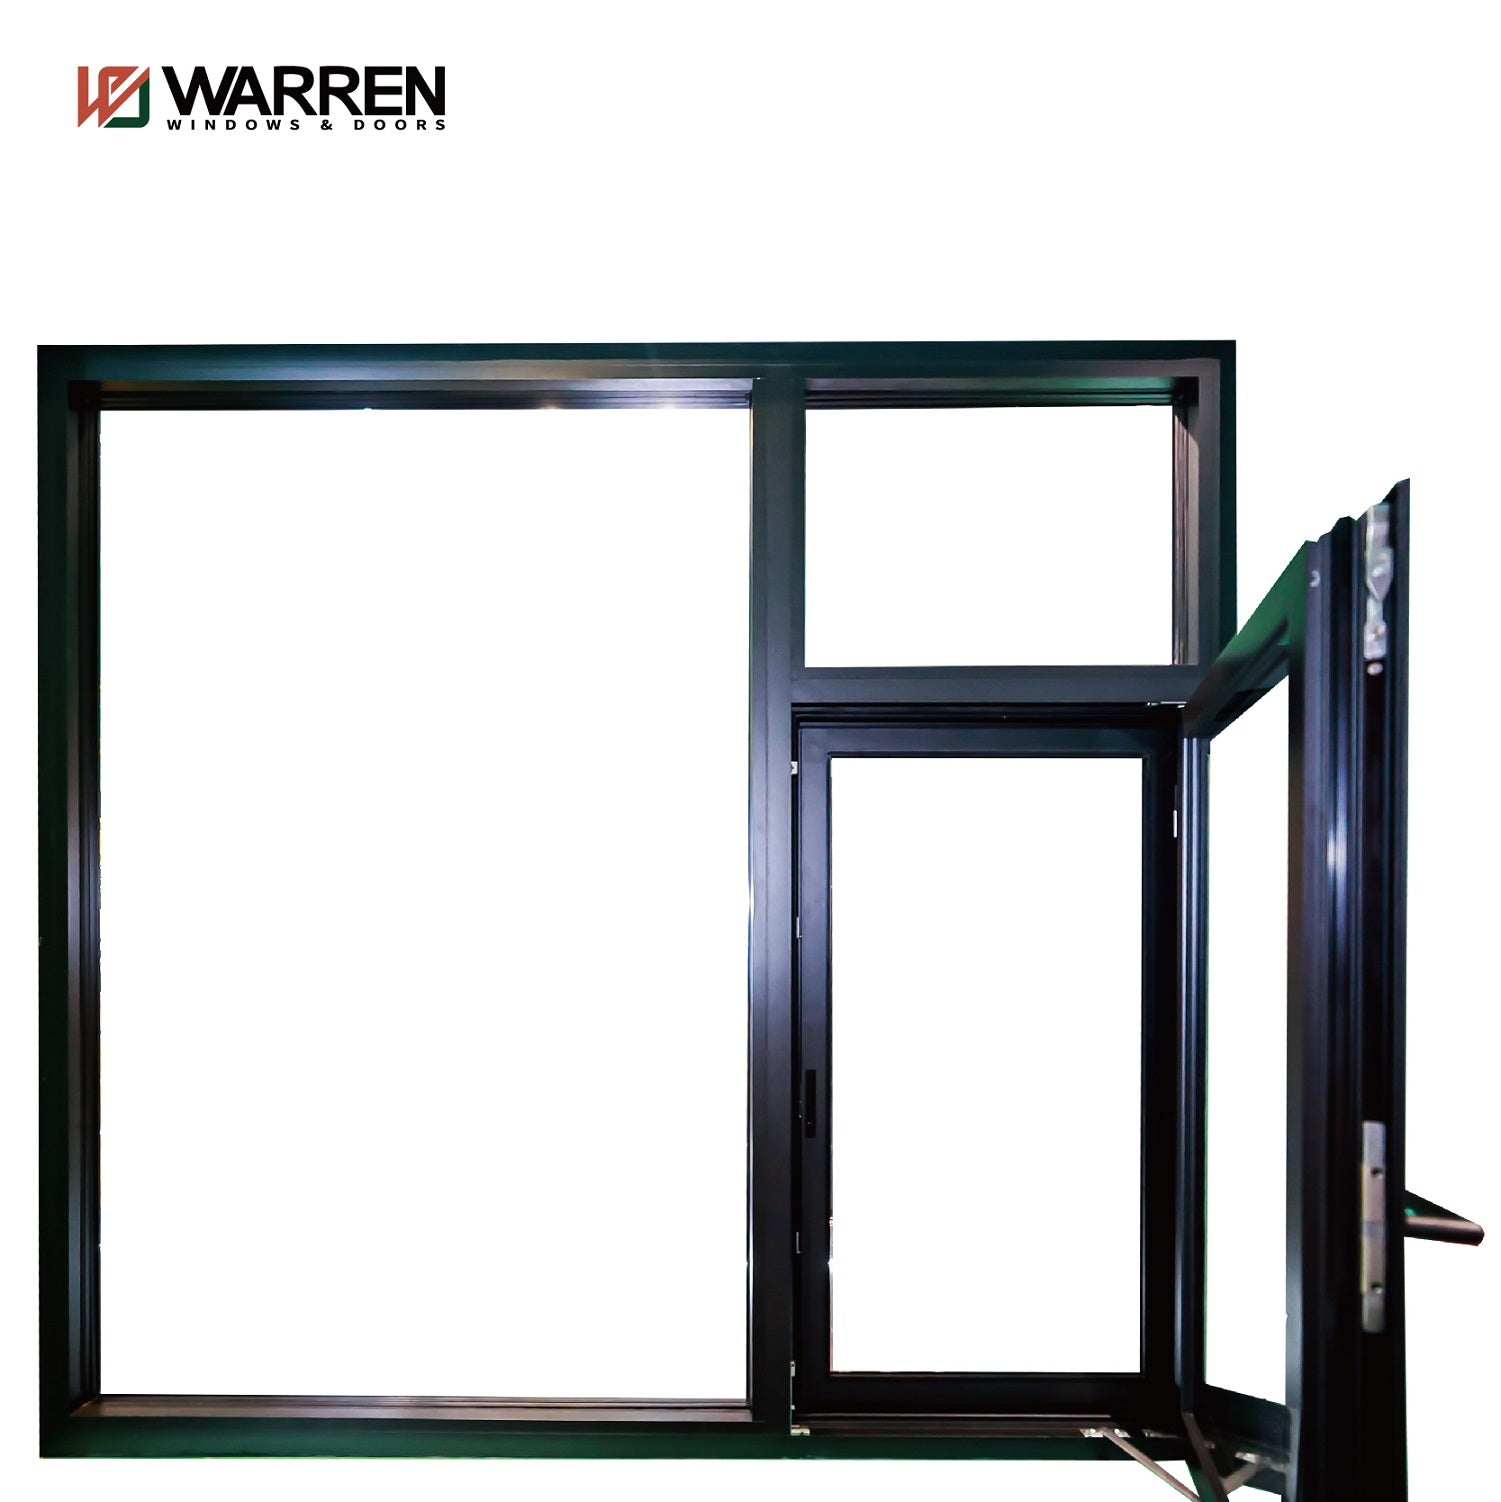 Warren 30*65 casement window with stainless steel flyscreen aluminium double glass